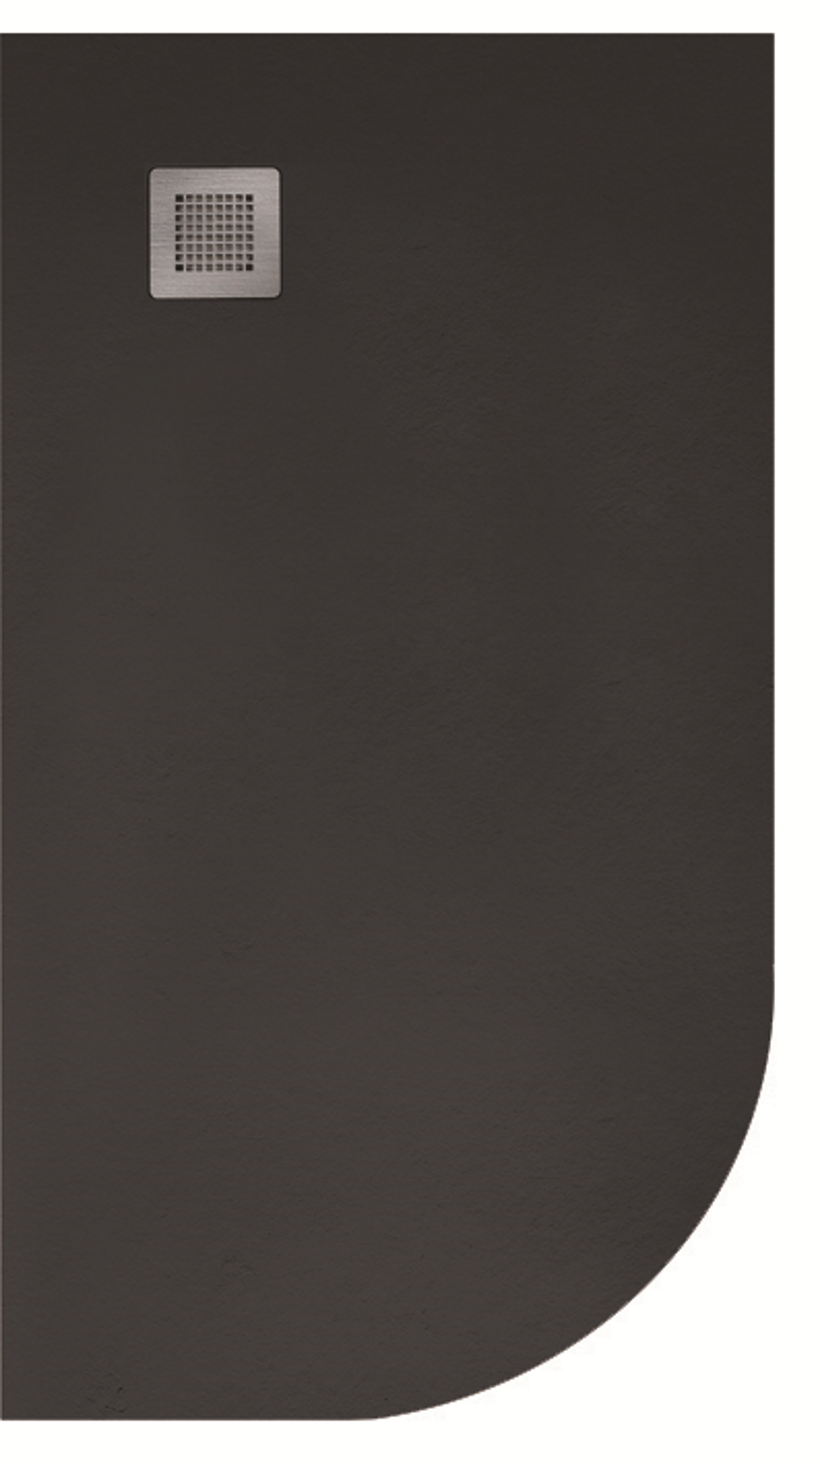 Slate Black 1200x900mm LH Offset Quadrant Shower Tray & Waste